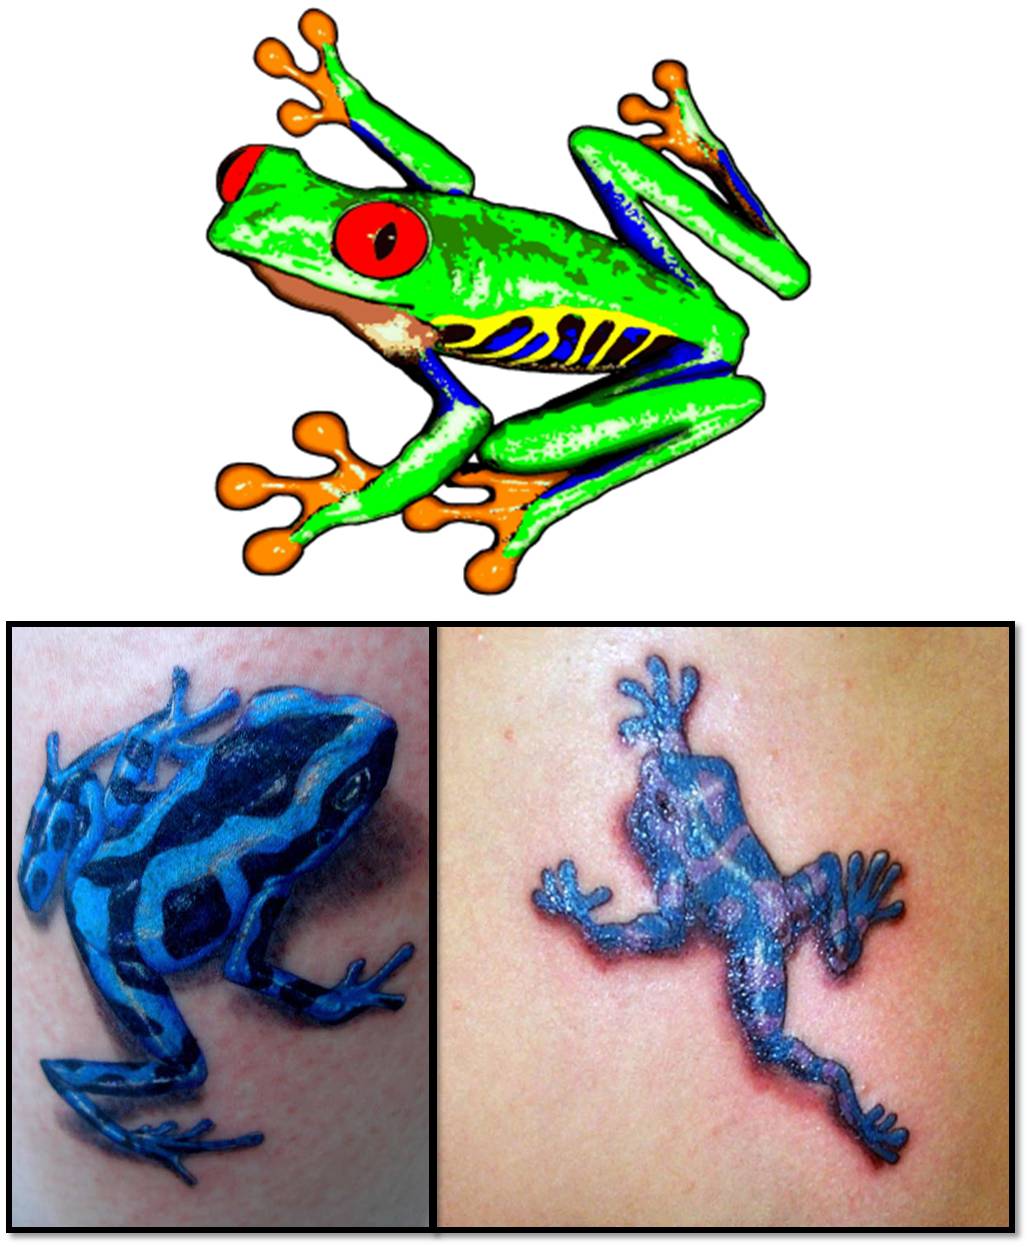 2240 Frog Tattoo Images Stock Photos  Vectors  Shutterstock